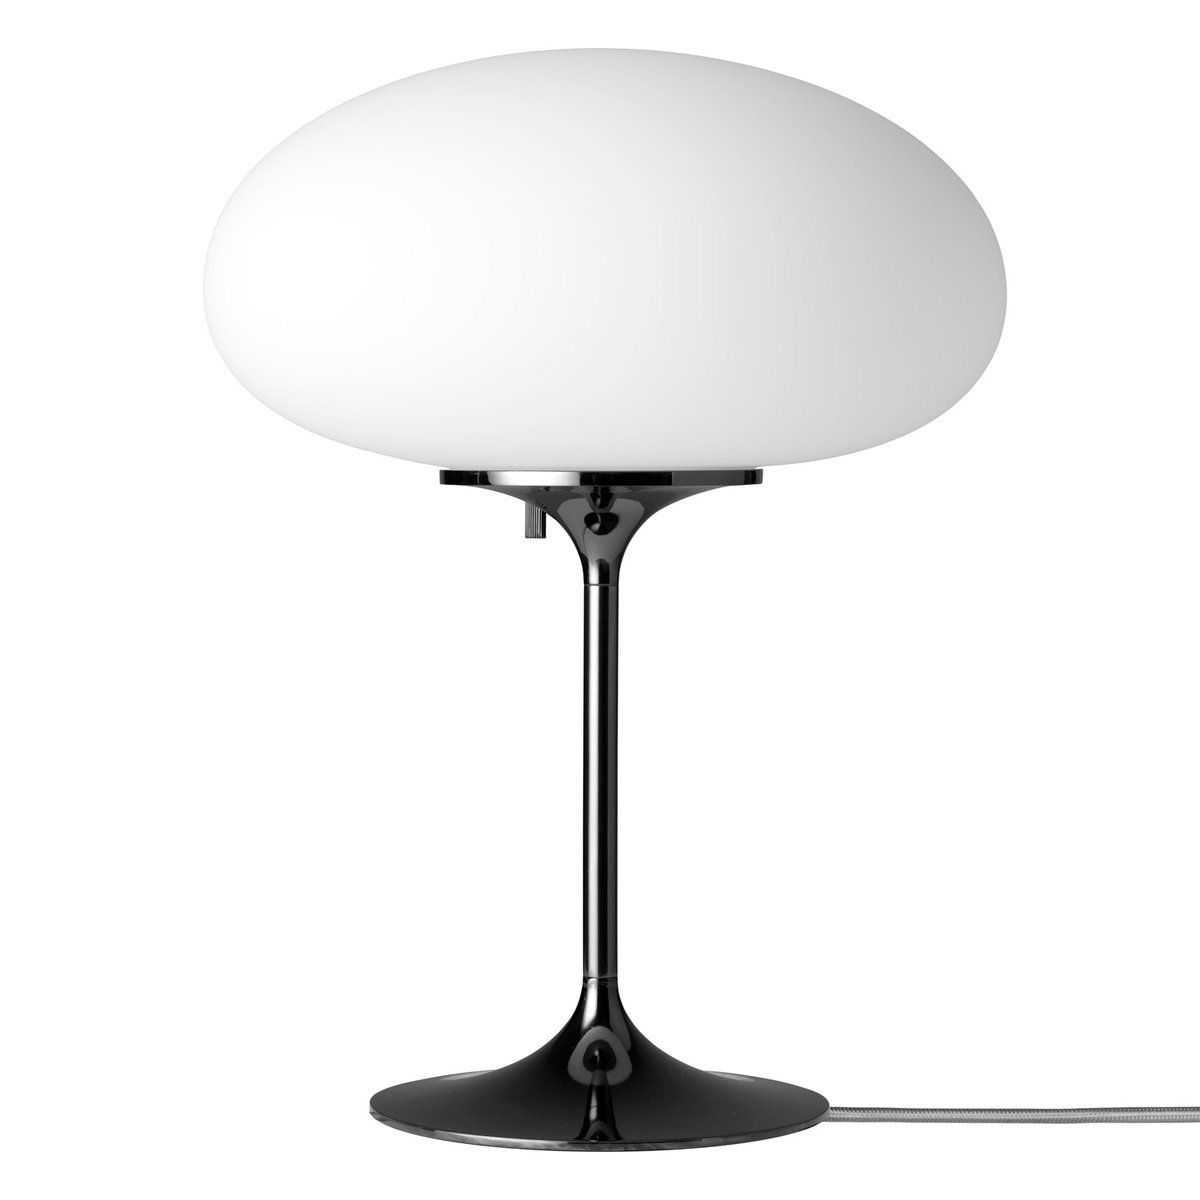 Gubi Stemlite Table Lamp, 42 Cm, Dimmable, Black Chrome